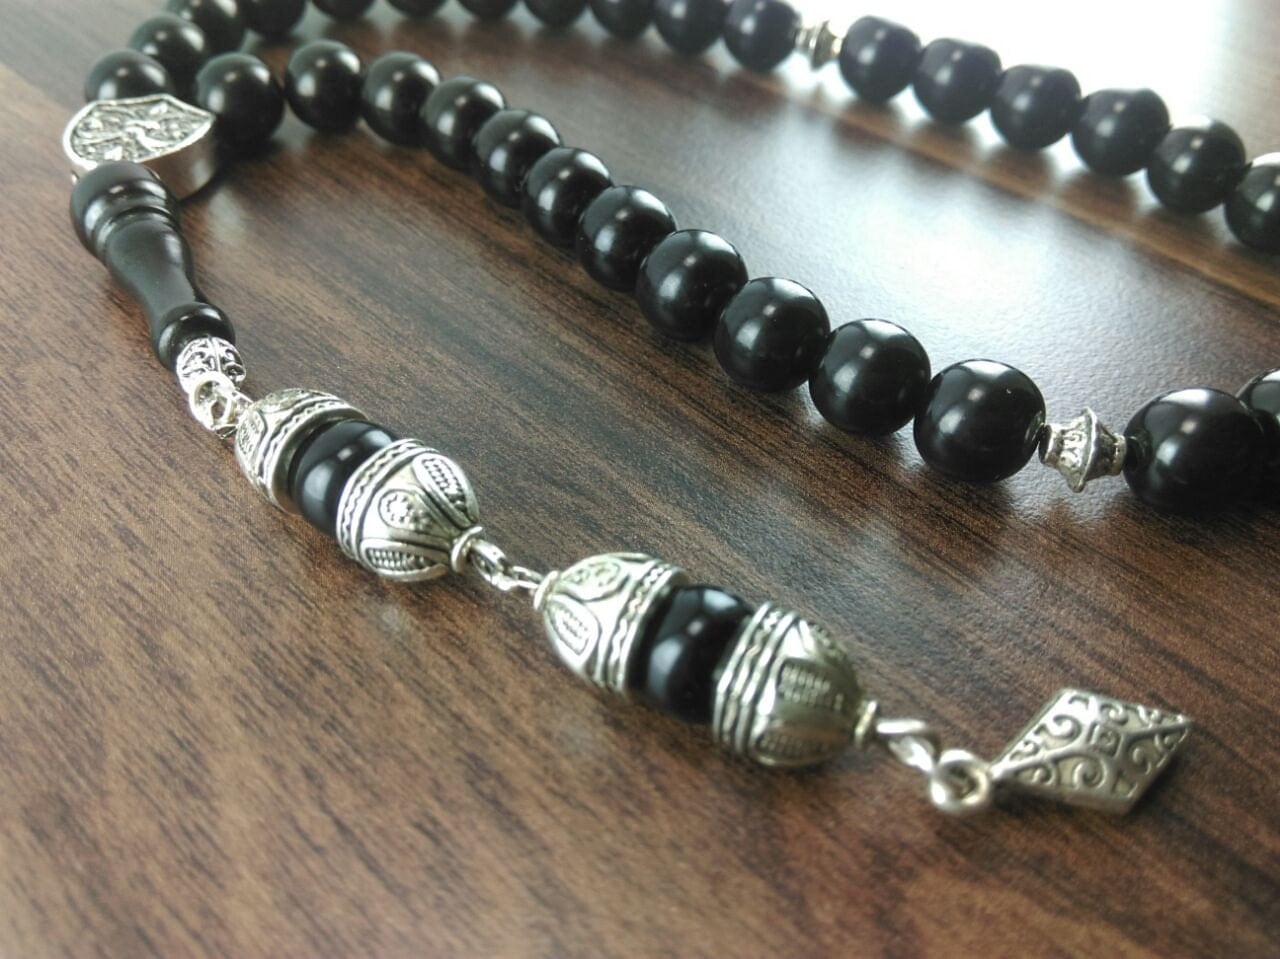 Gemstone tasbih 33 Islamic prayer beads misbaha handmade